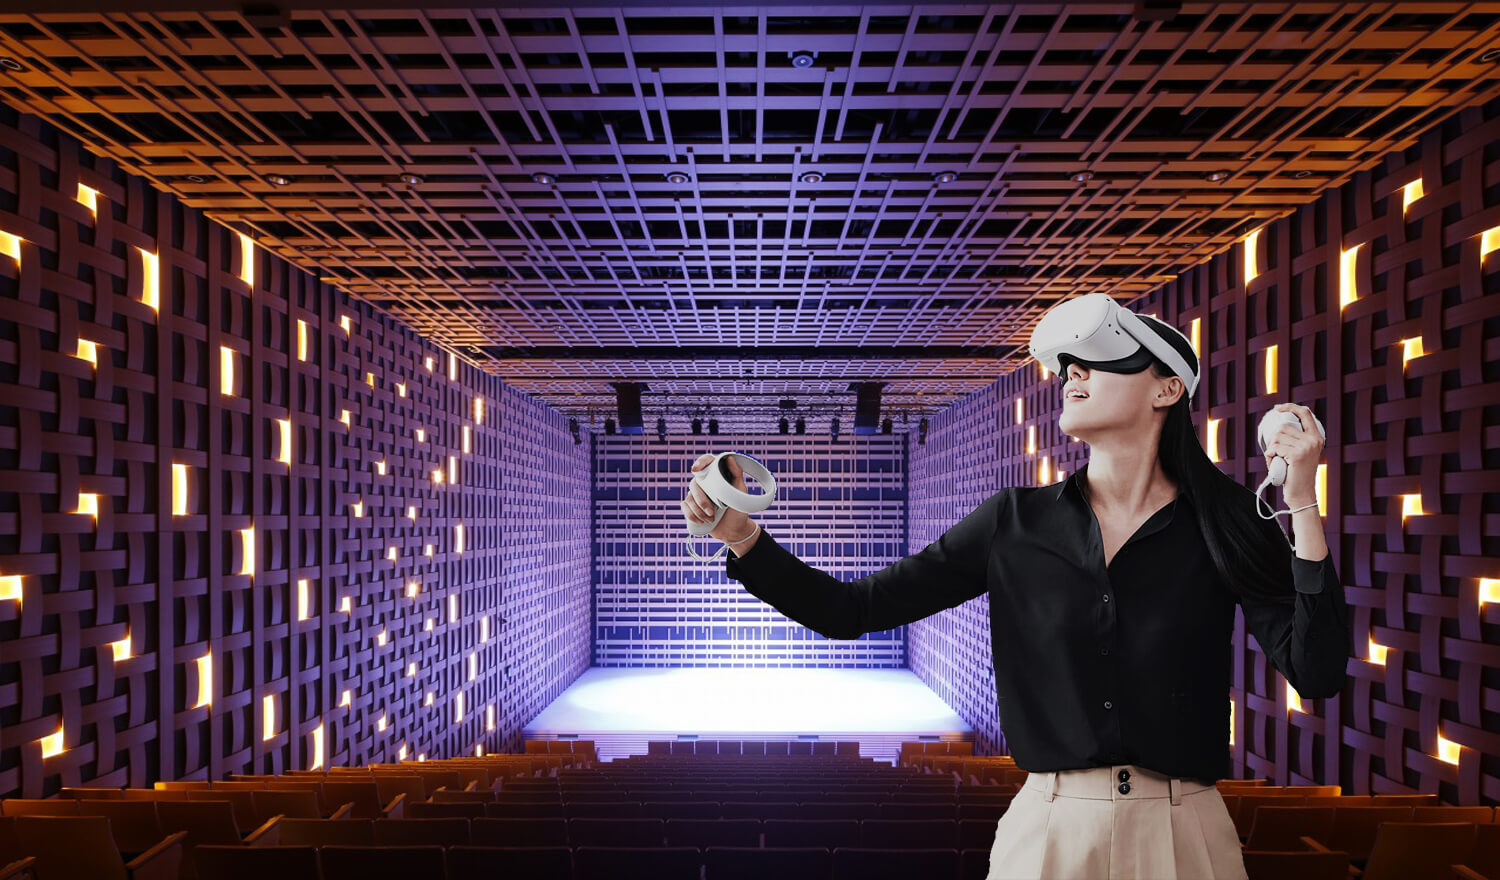 Kotobuki Seating España is working with VR (Virtual Reality) technology